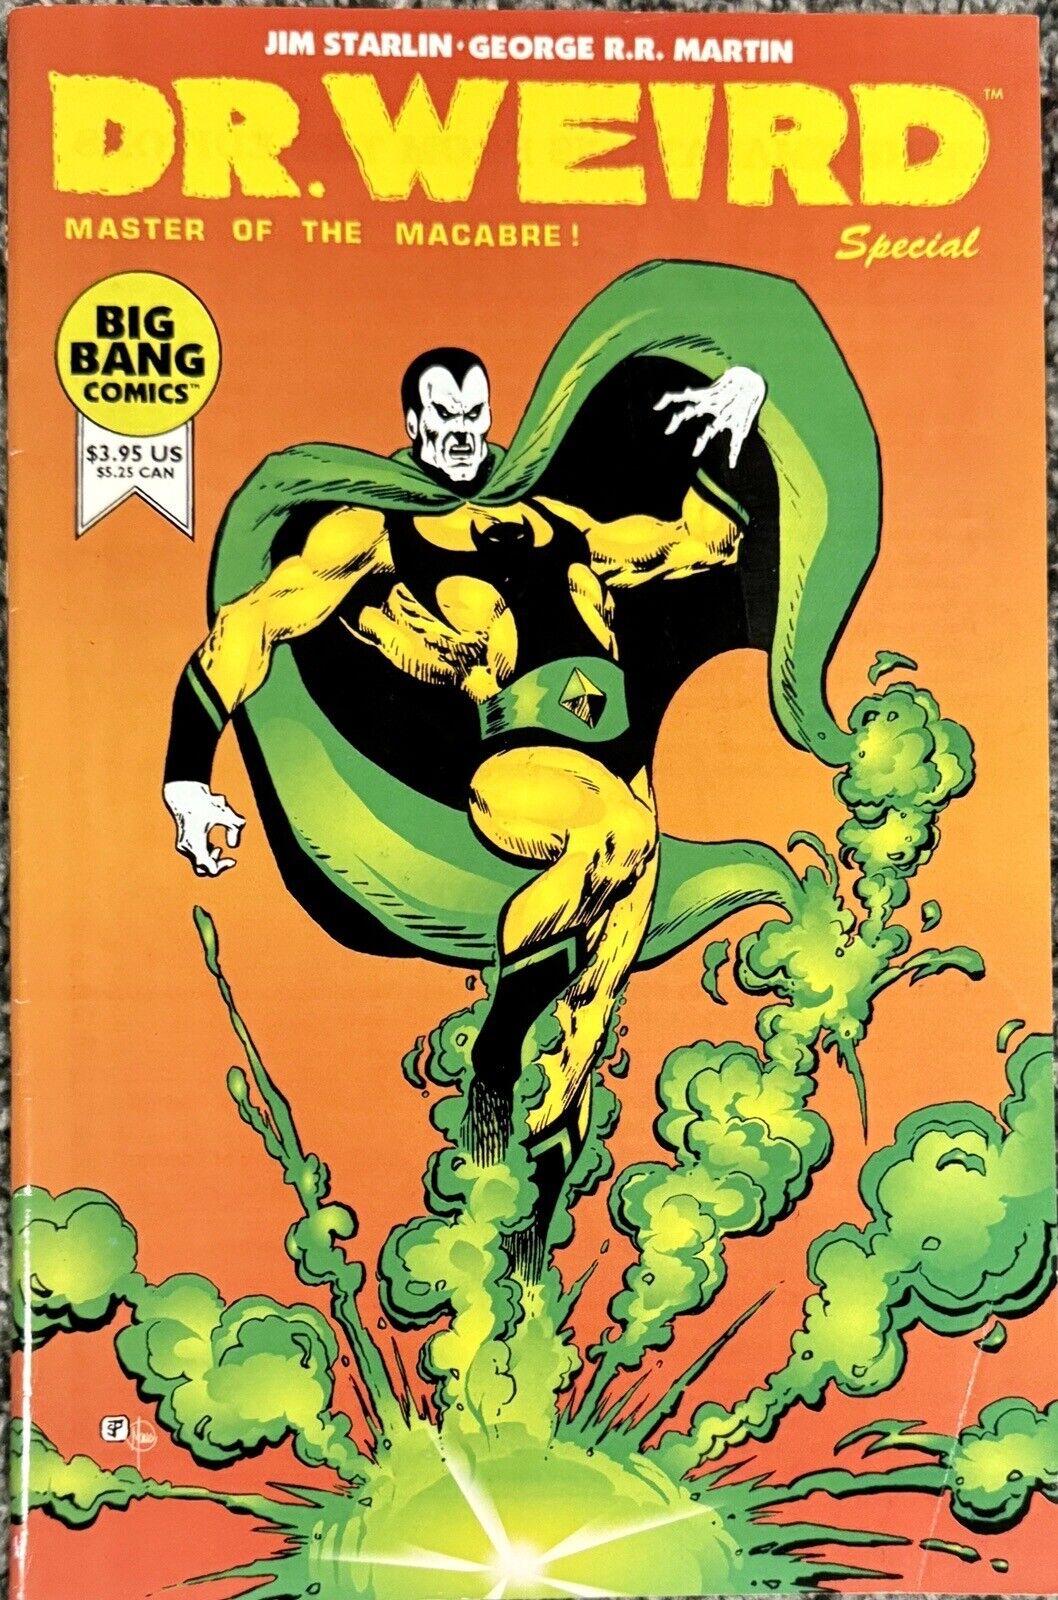 DR. WEIRD SPECIAL #1 Big Bang Comics 1994 Jim Starlin NM-